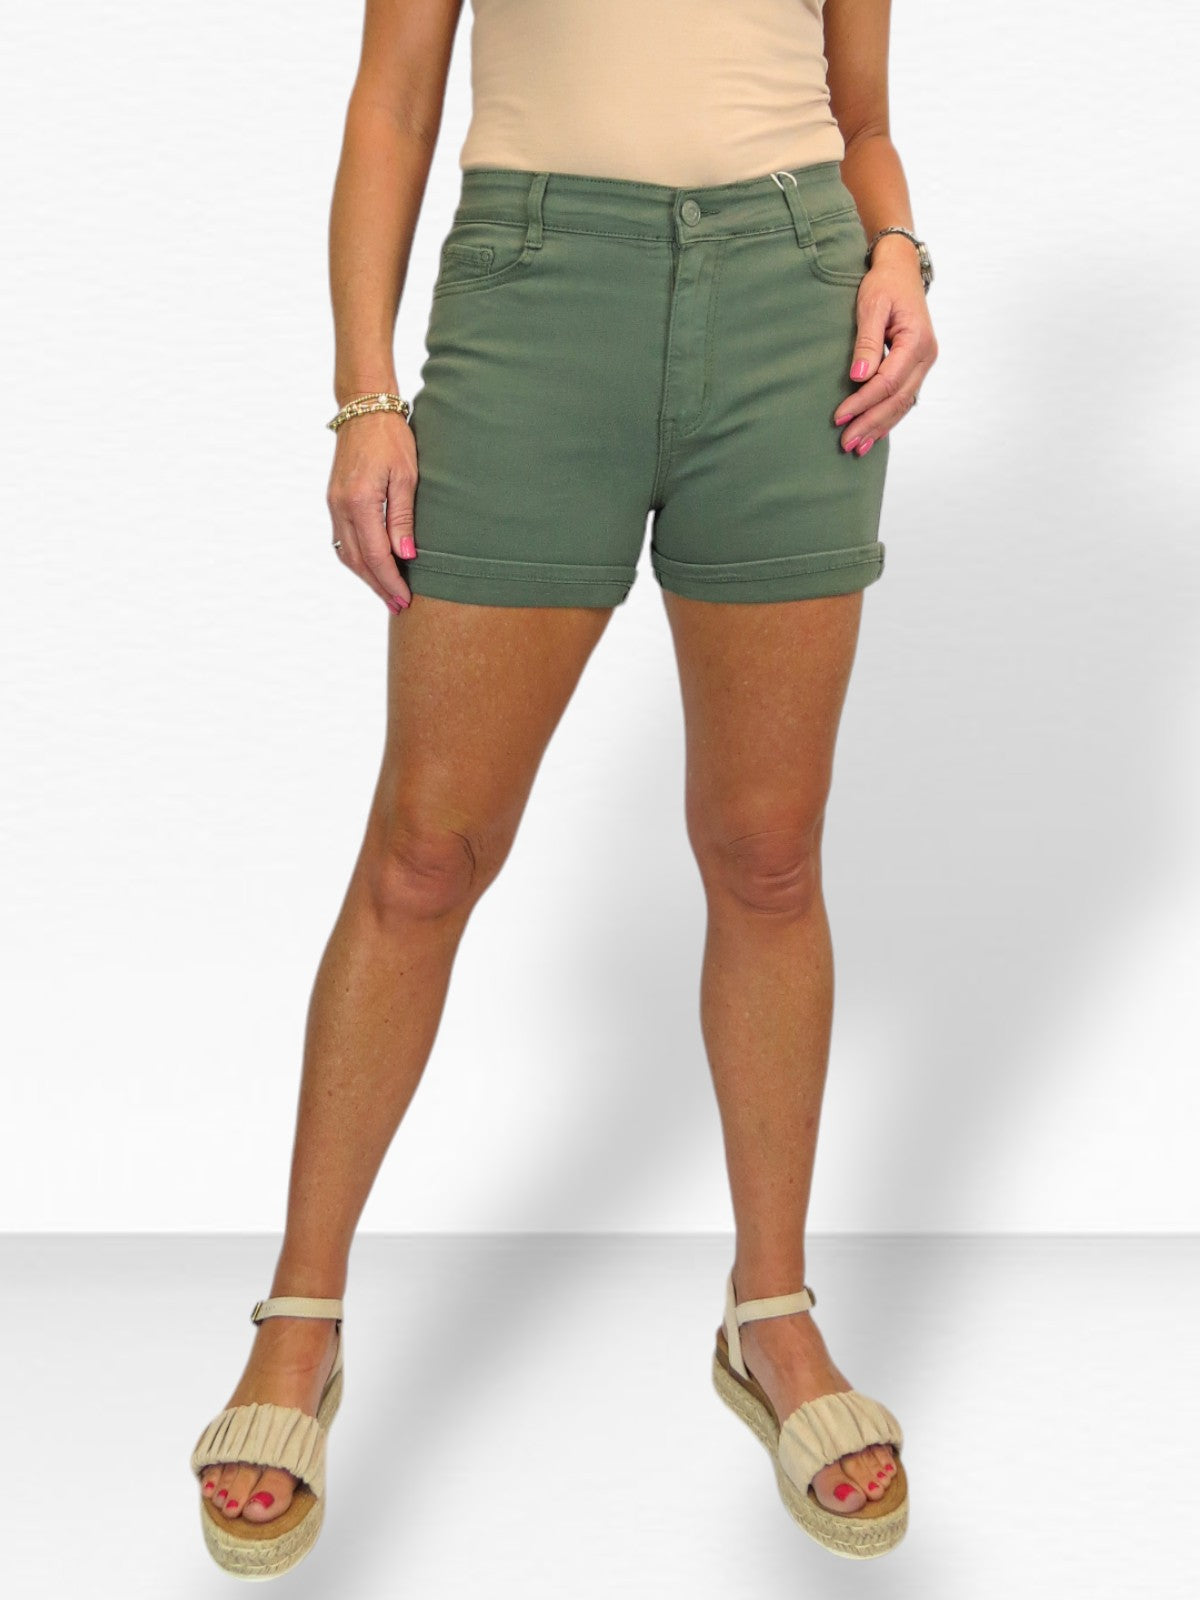 Women's Summer Denim Slim Fit Shorts with Turn Up Cuff Khaki Green